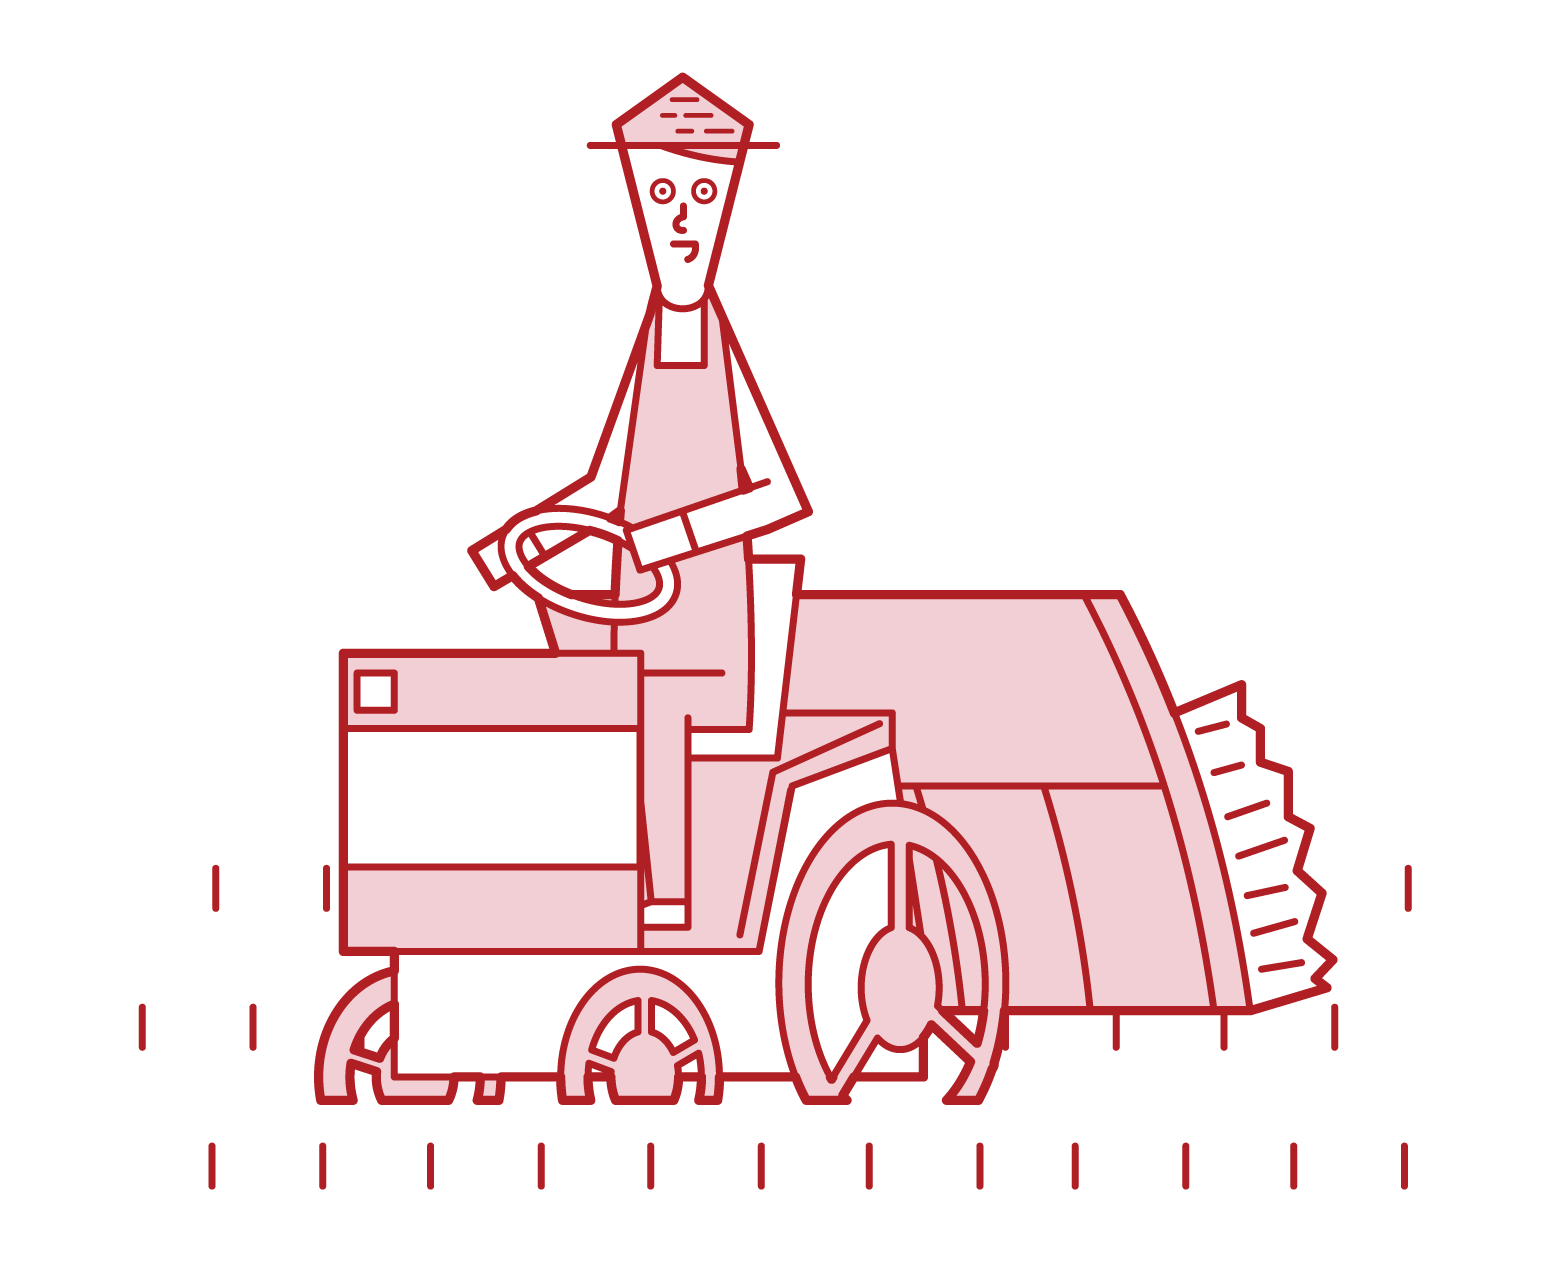 Illustration of a man driving a passenger rice planting machine